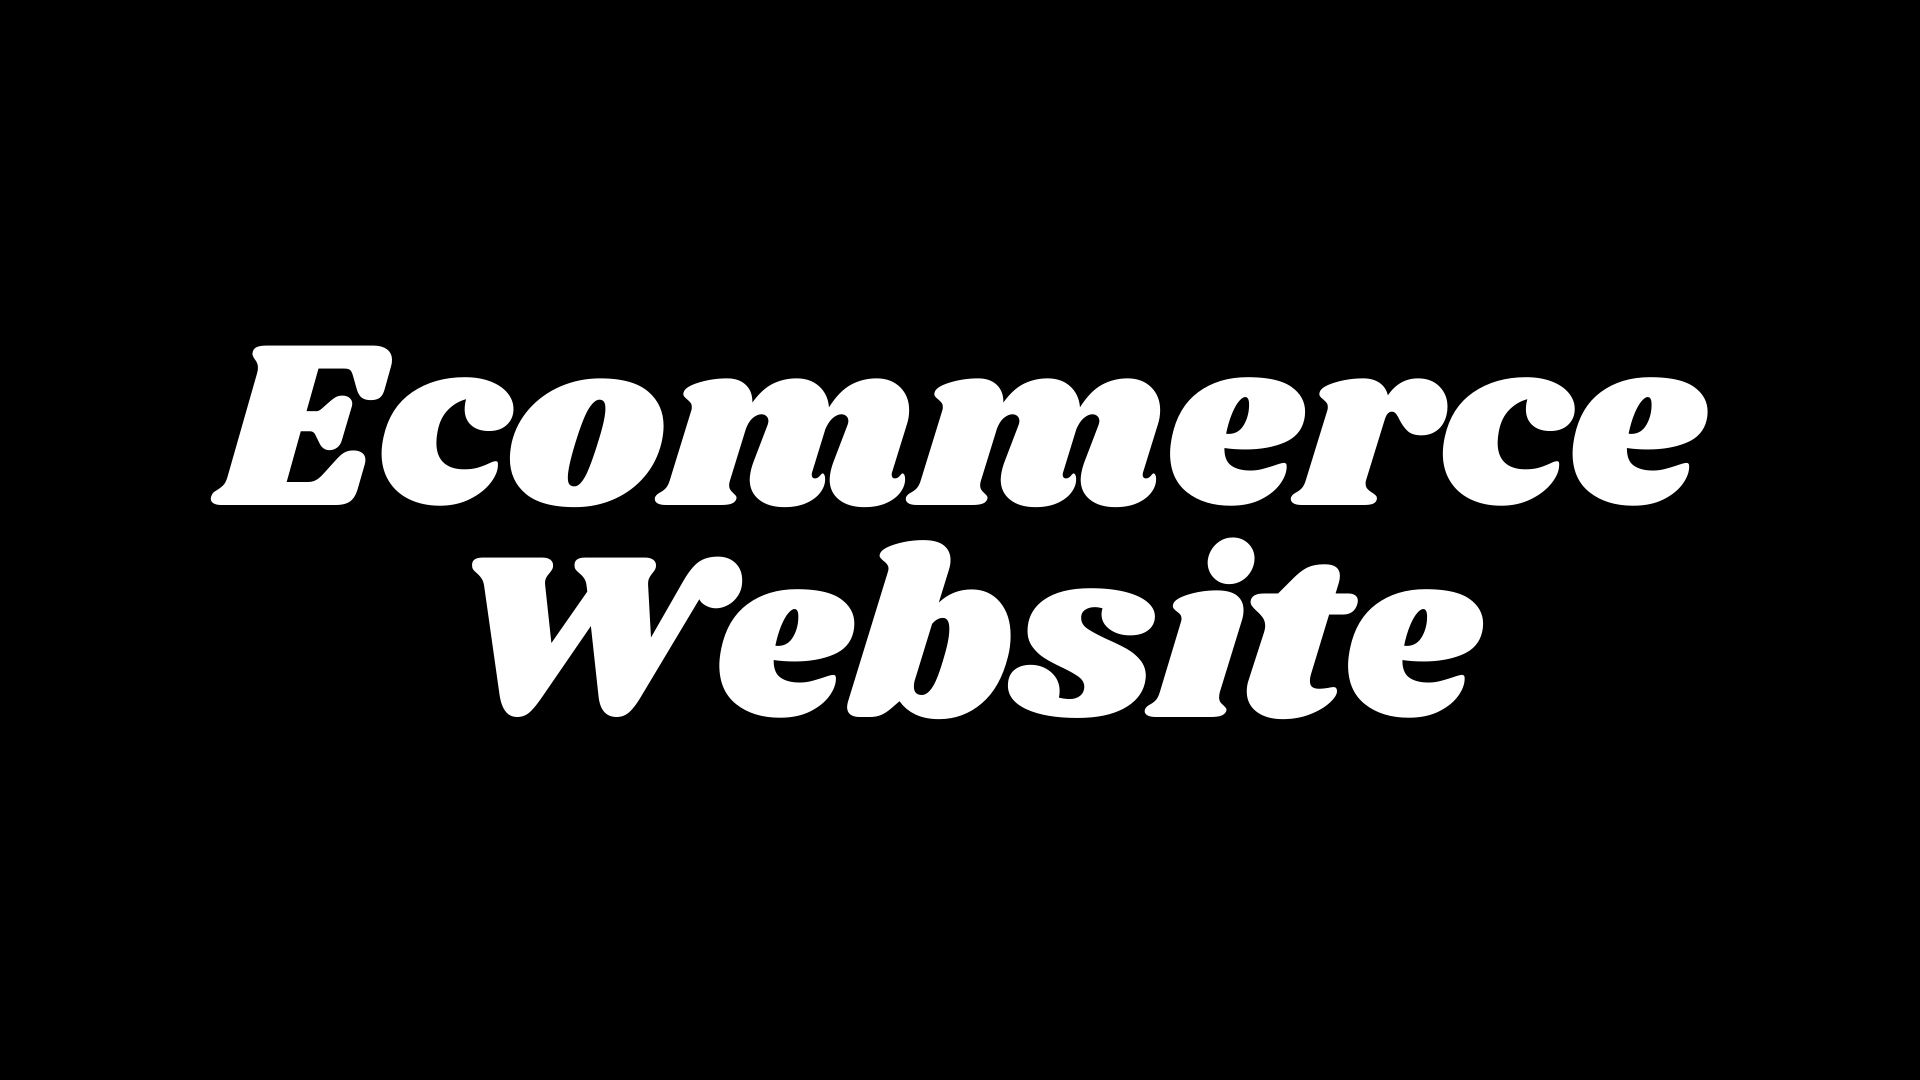 Best ecommerce website design by daulat hussain